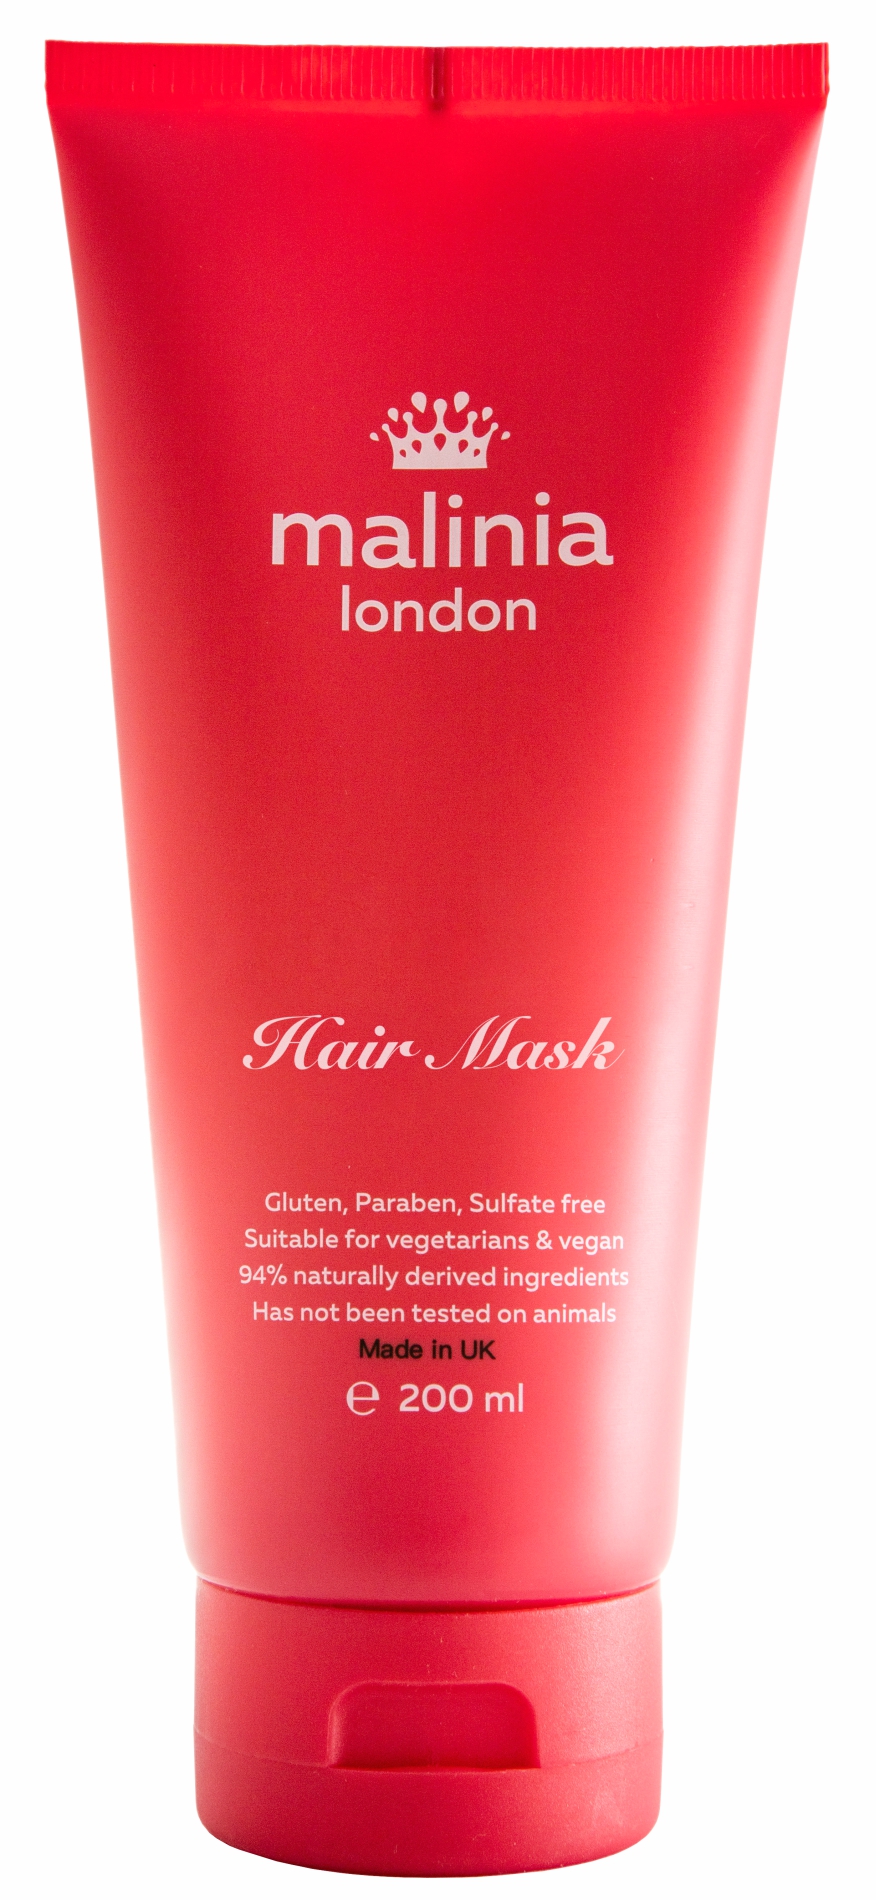 Malinia London Hair Mask 200ml